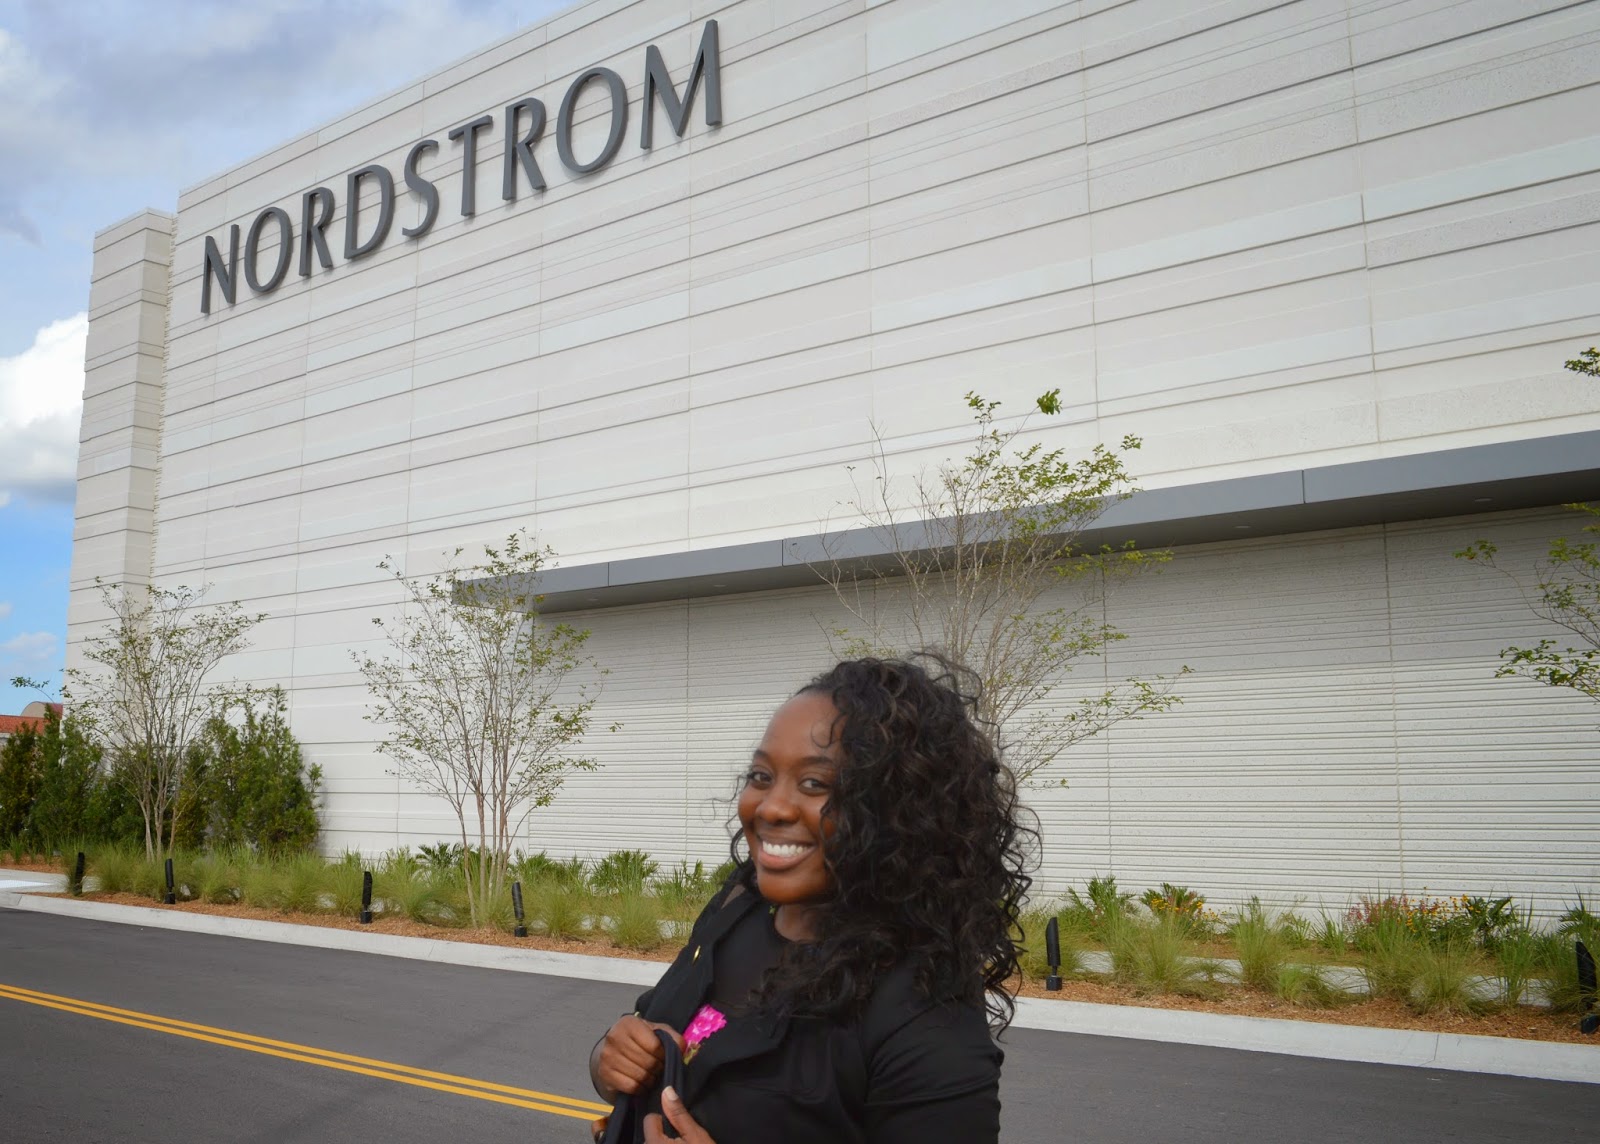 Nordstrom customer service tales not just legend - Jacksonville